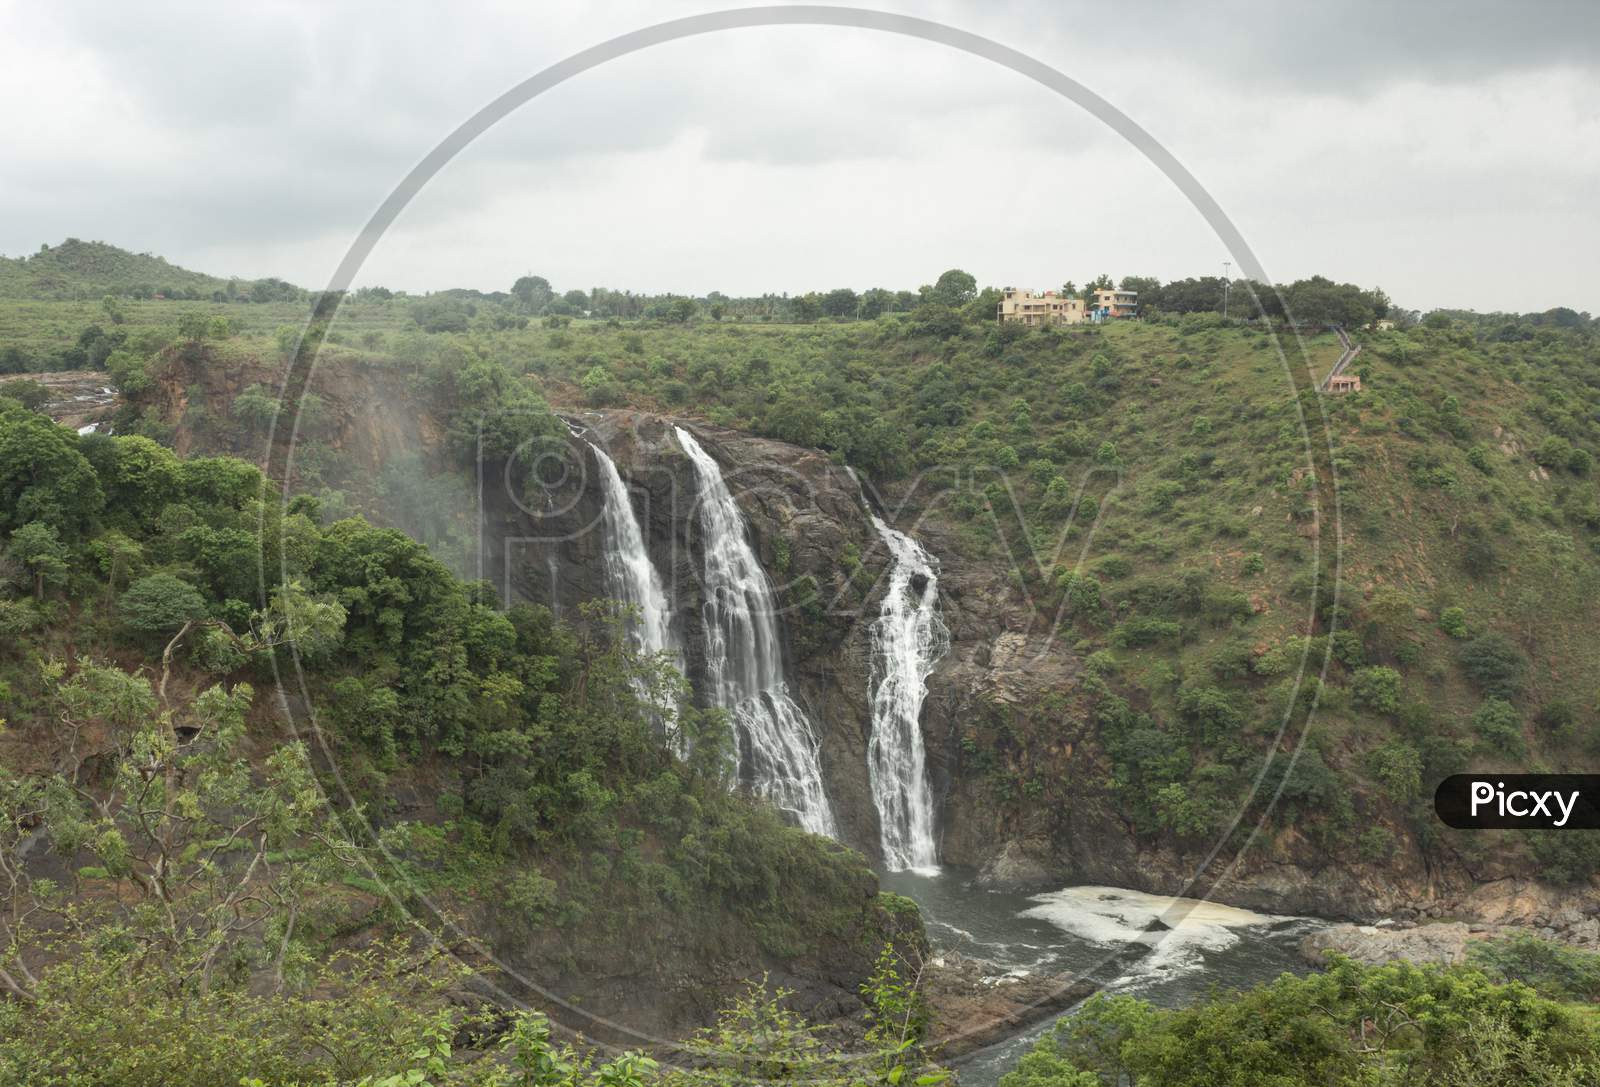 Shimsha waterfall at Shivanasamudra in Karnataka/India.